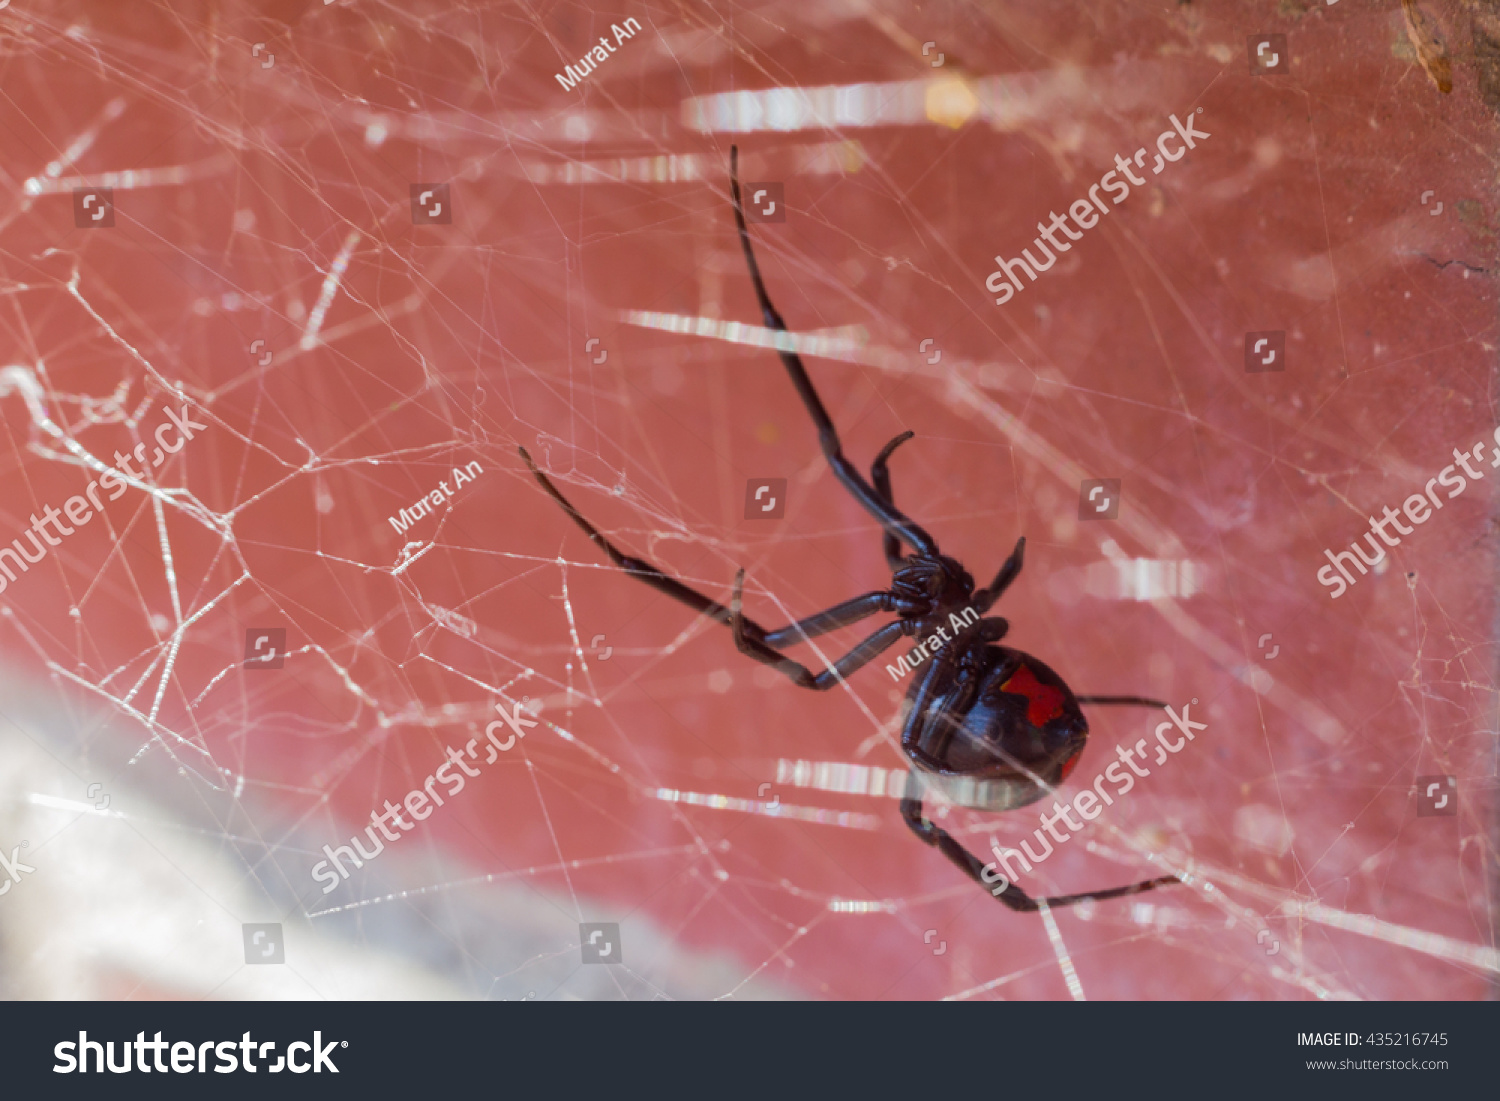 Black Widow In Her Webs Between Red Bricks. Stock Photo 435216745 : Shutterstock How To Hang Spiders On Brick House